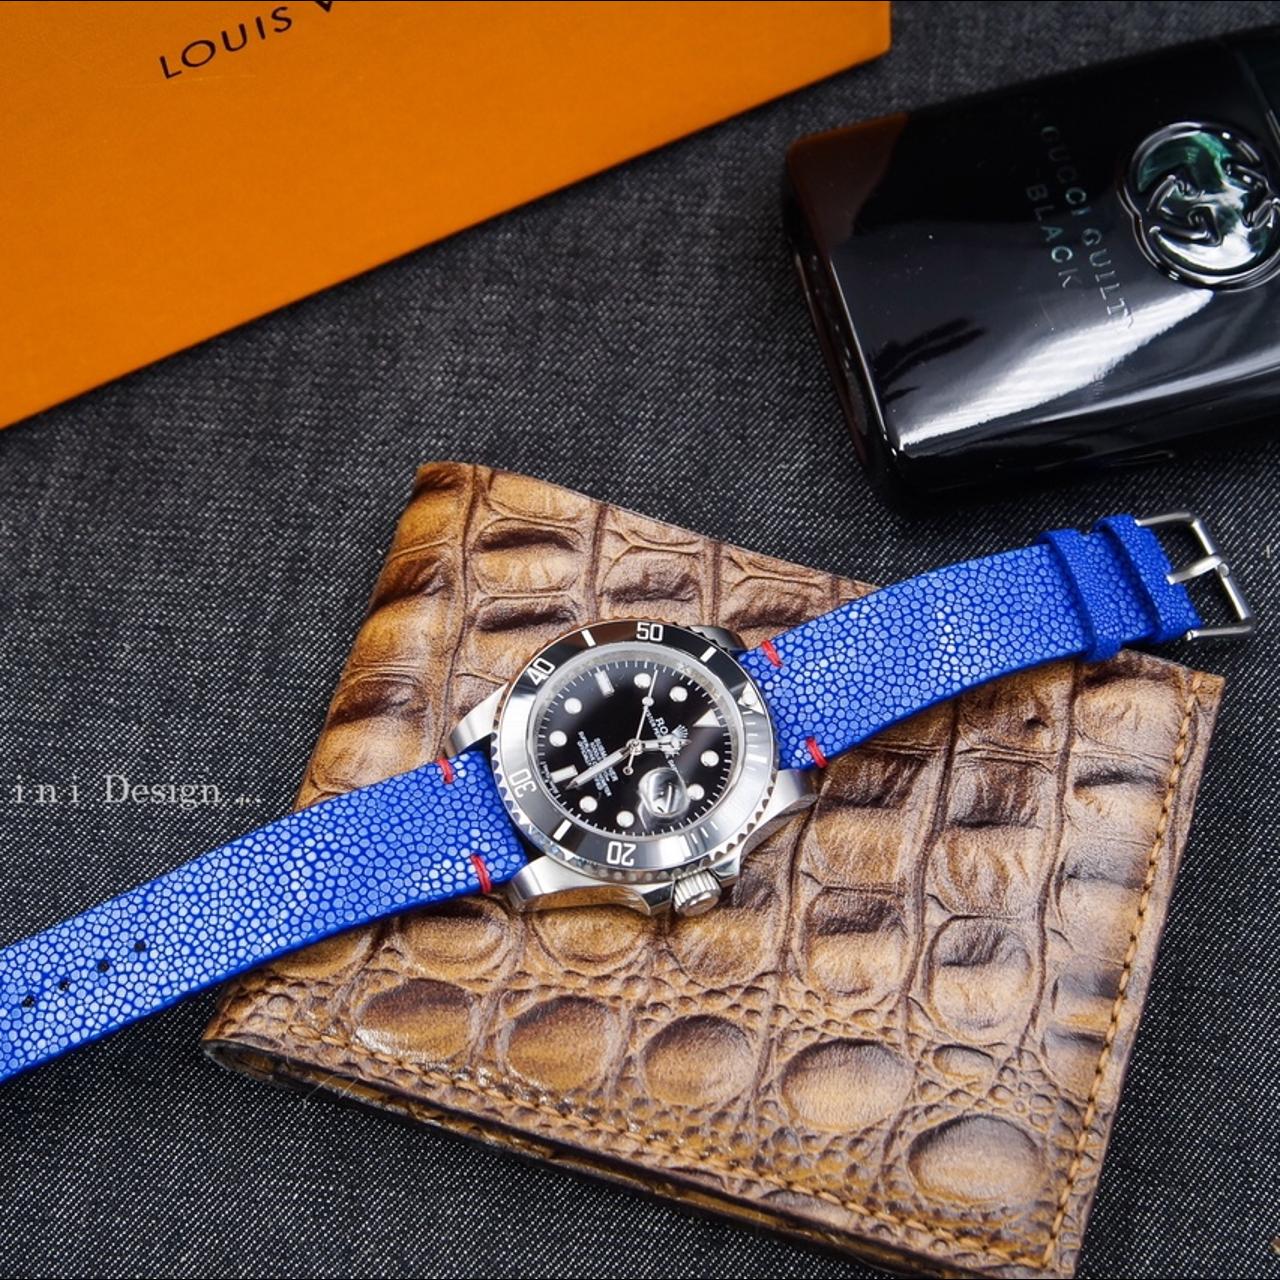 Rolex Men's Blue Watch